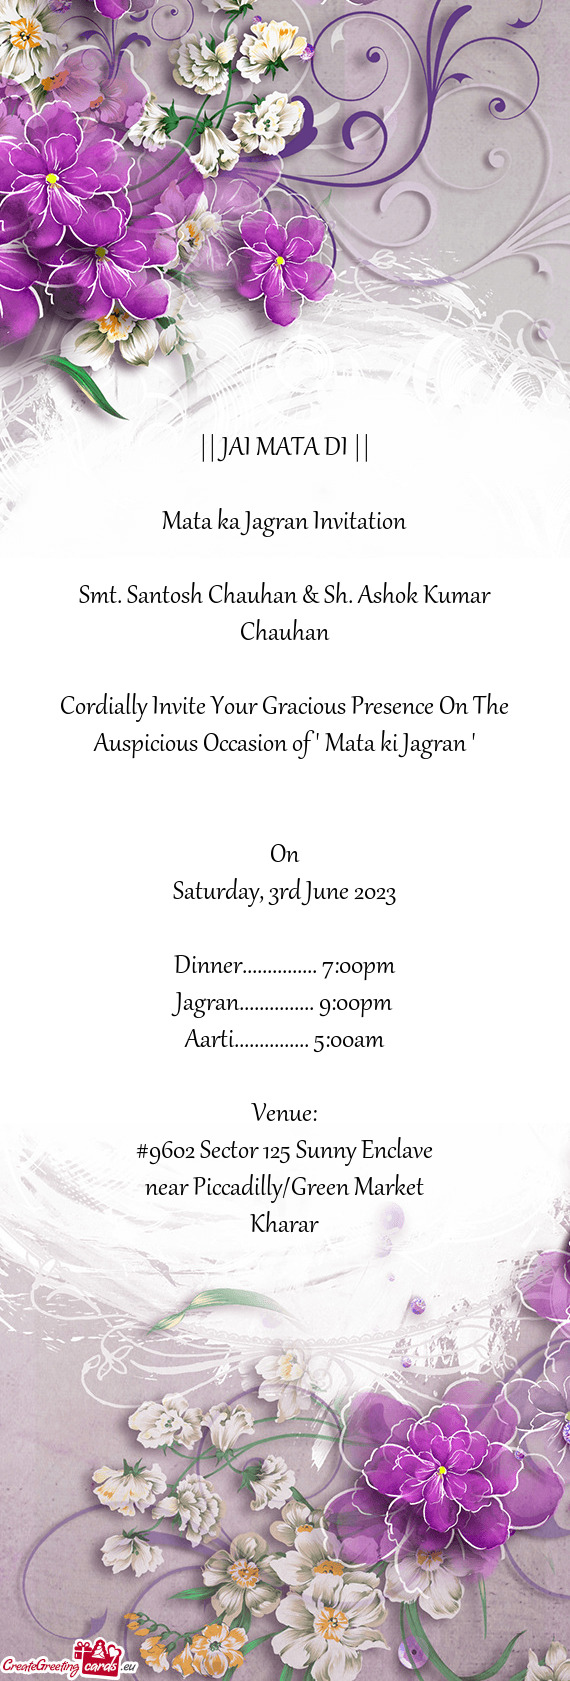 Cordially Invite Your Gracious Presence On The Auspicious Occasion of " Mata ki Jagran "